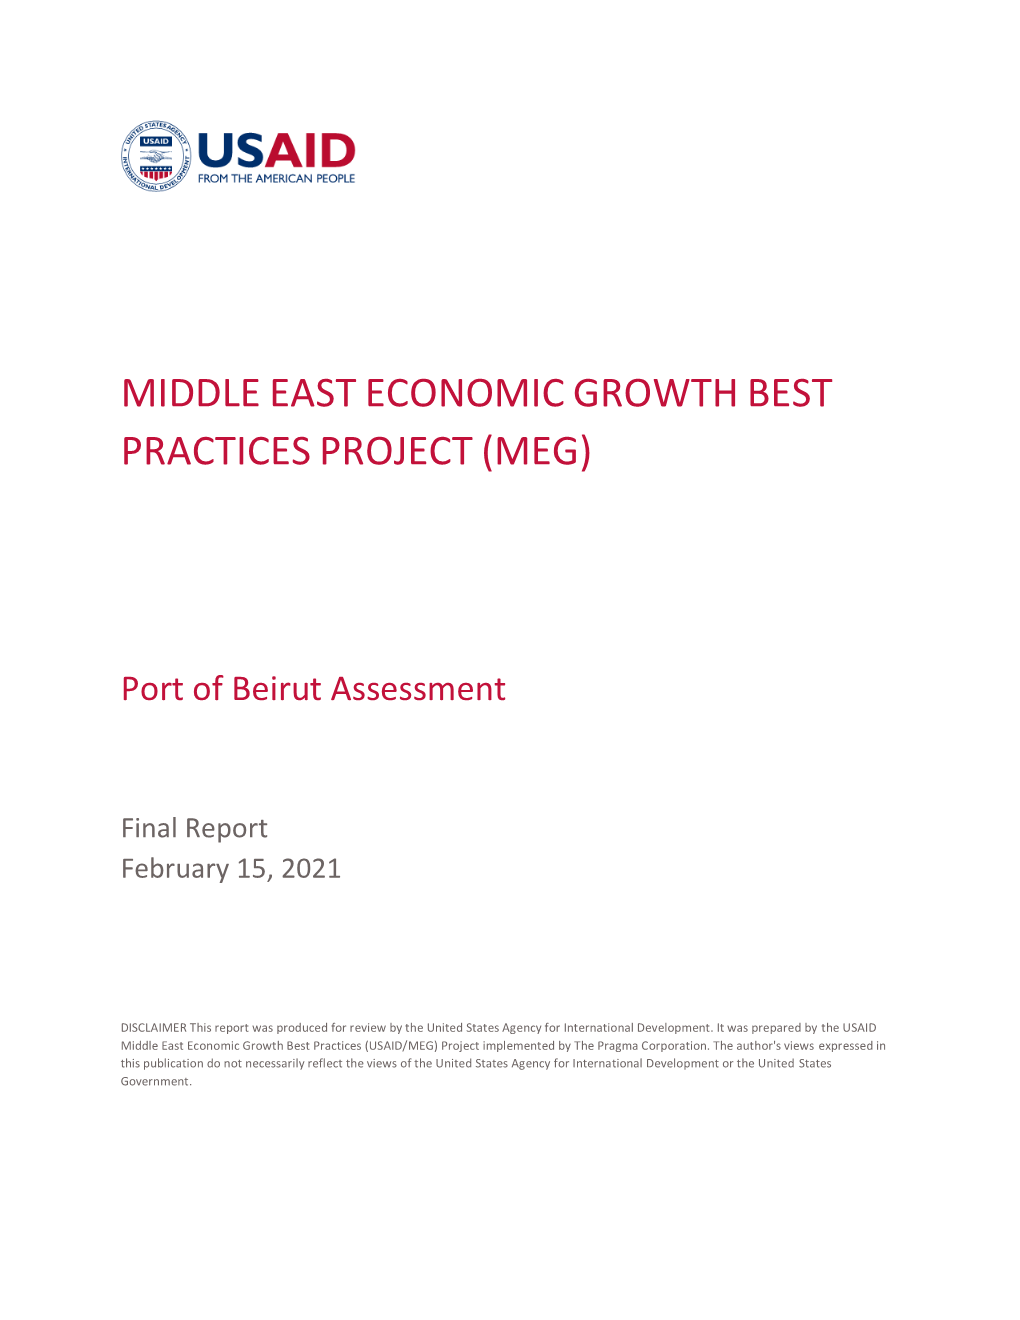 Port of Beirut Assessment (Condensed)